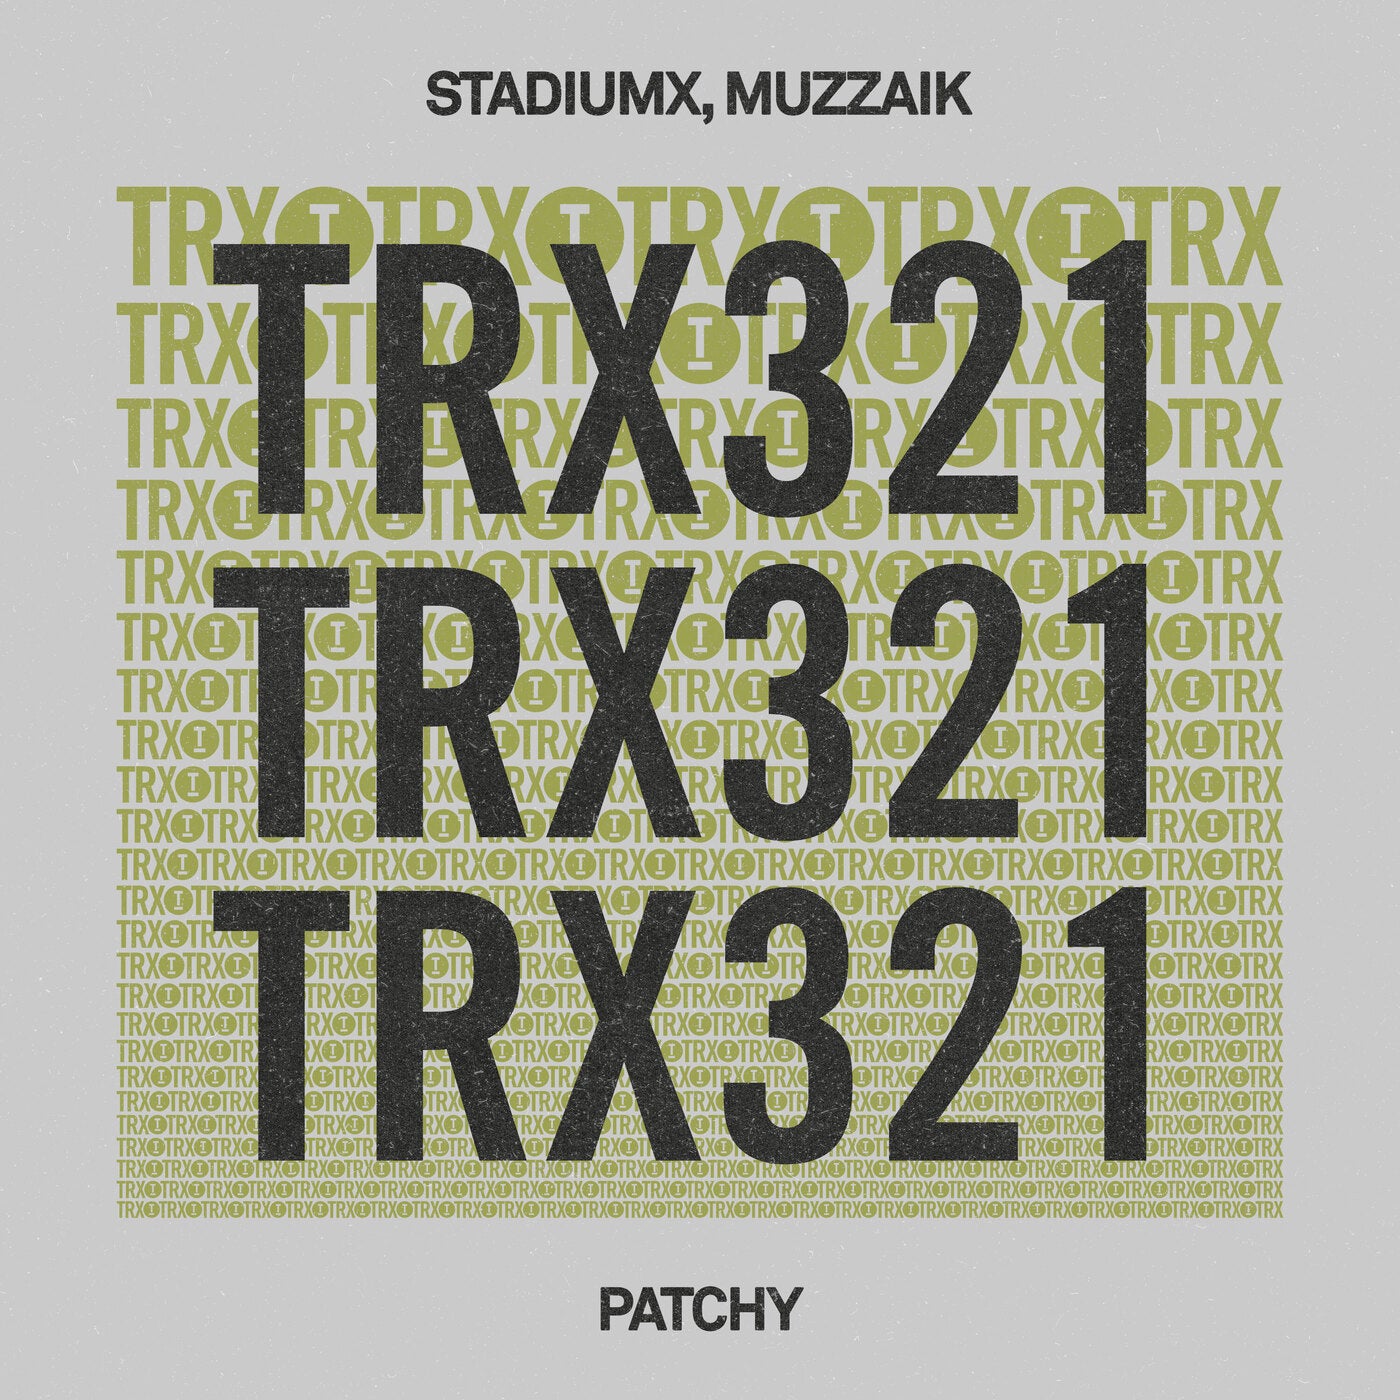 image cover: Muzzaik, Stadiumx - Patchy on Toolroom Trax